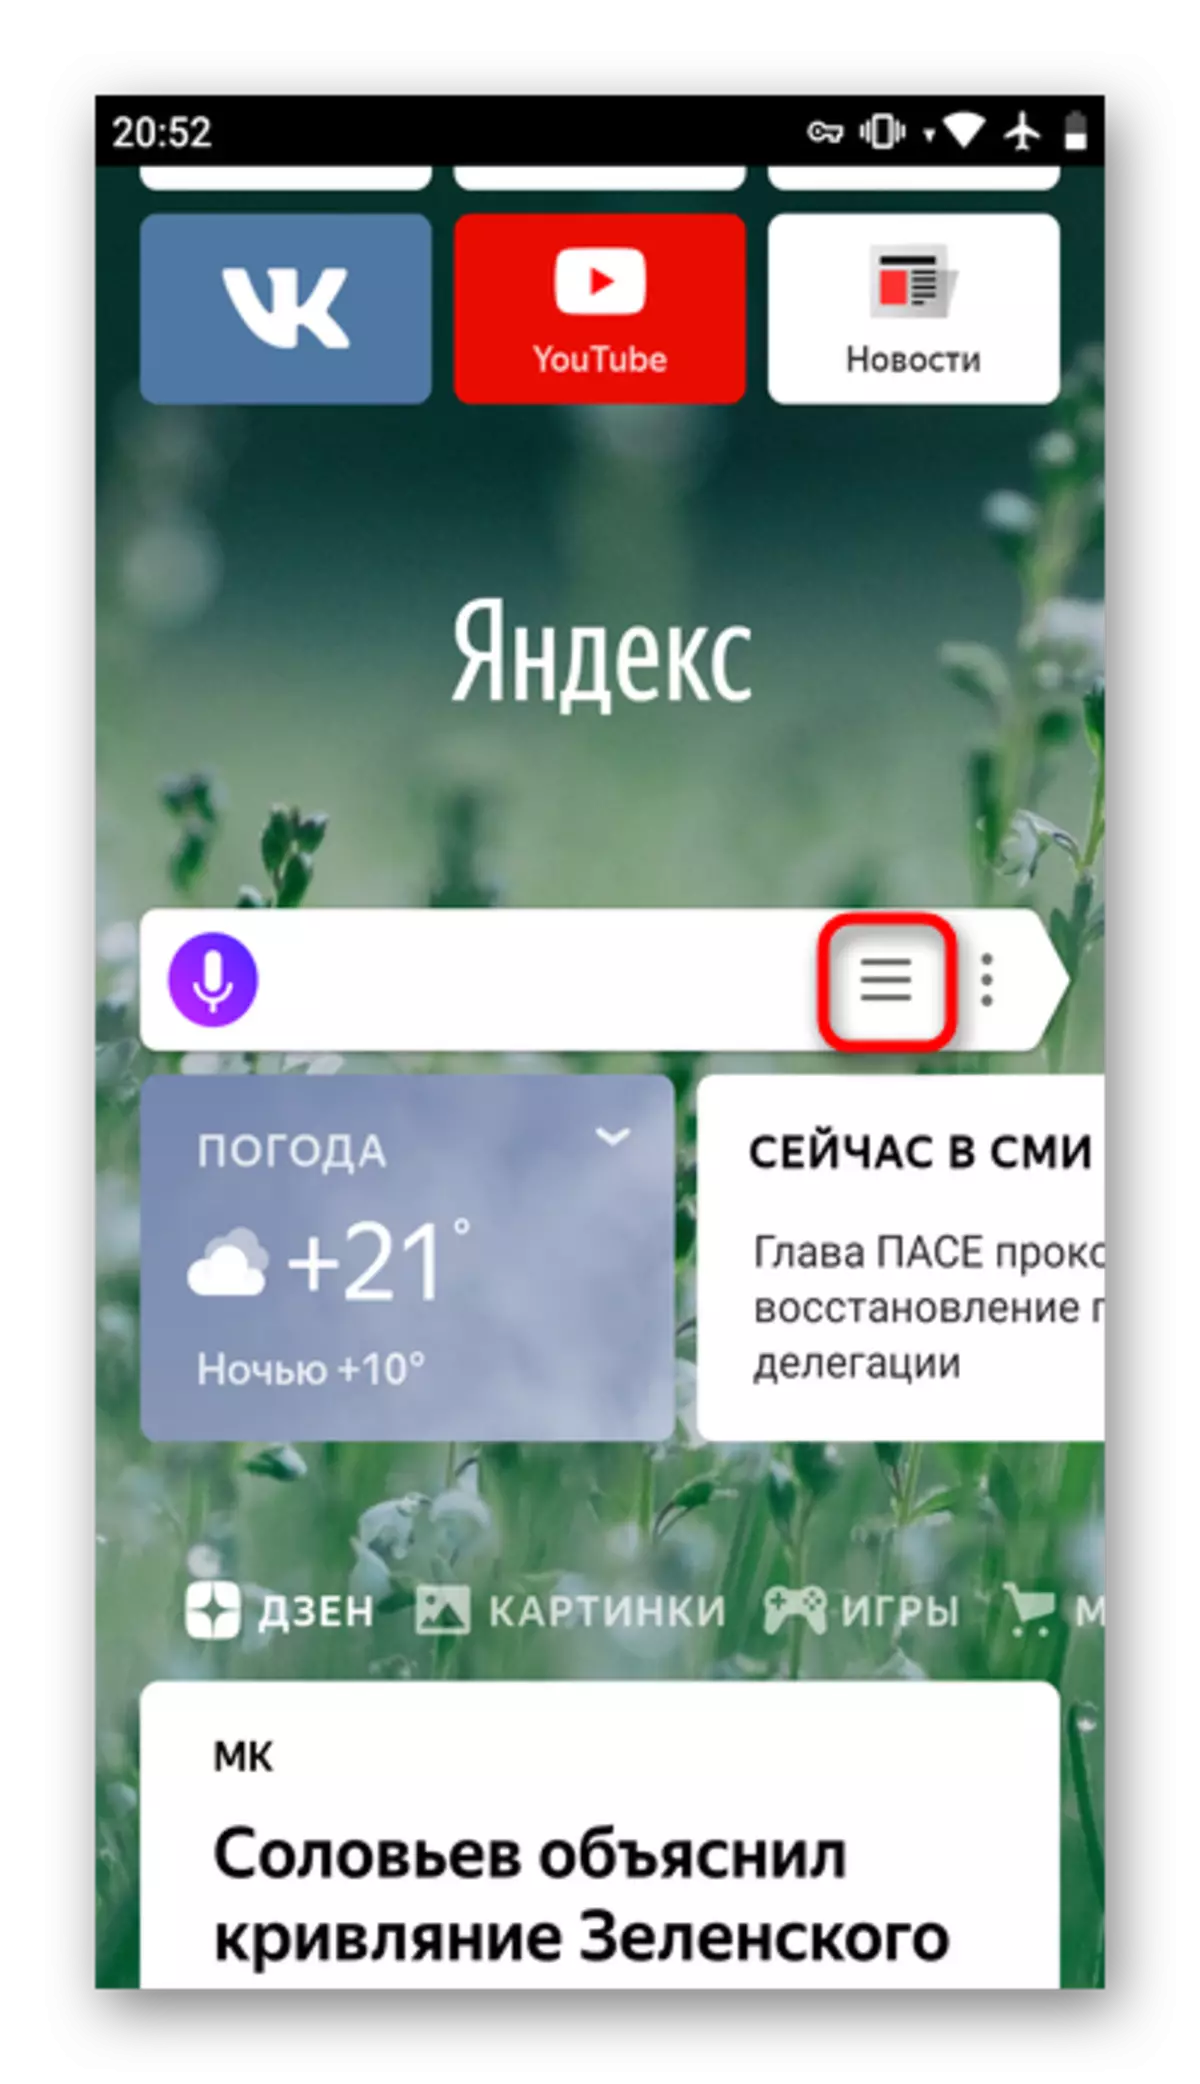 Yandroid හි Yandex.browser හි අභිරුචි මෙනුවක් විවෘත කිරීම